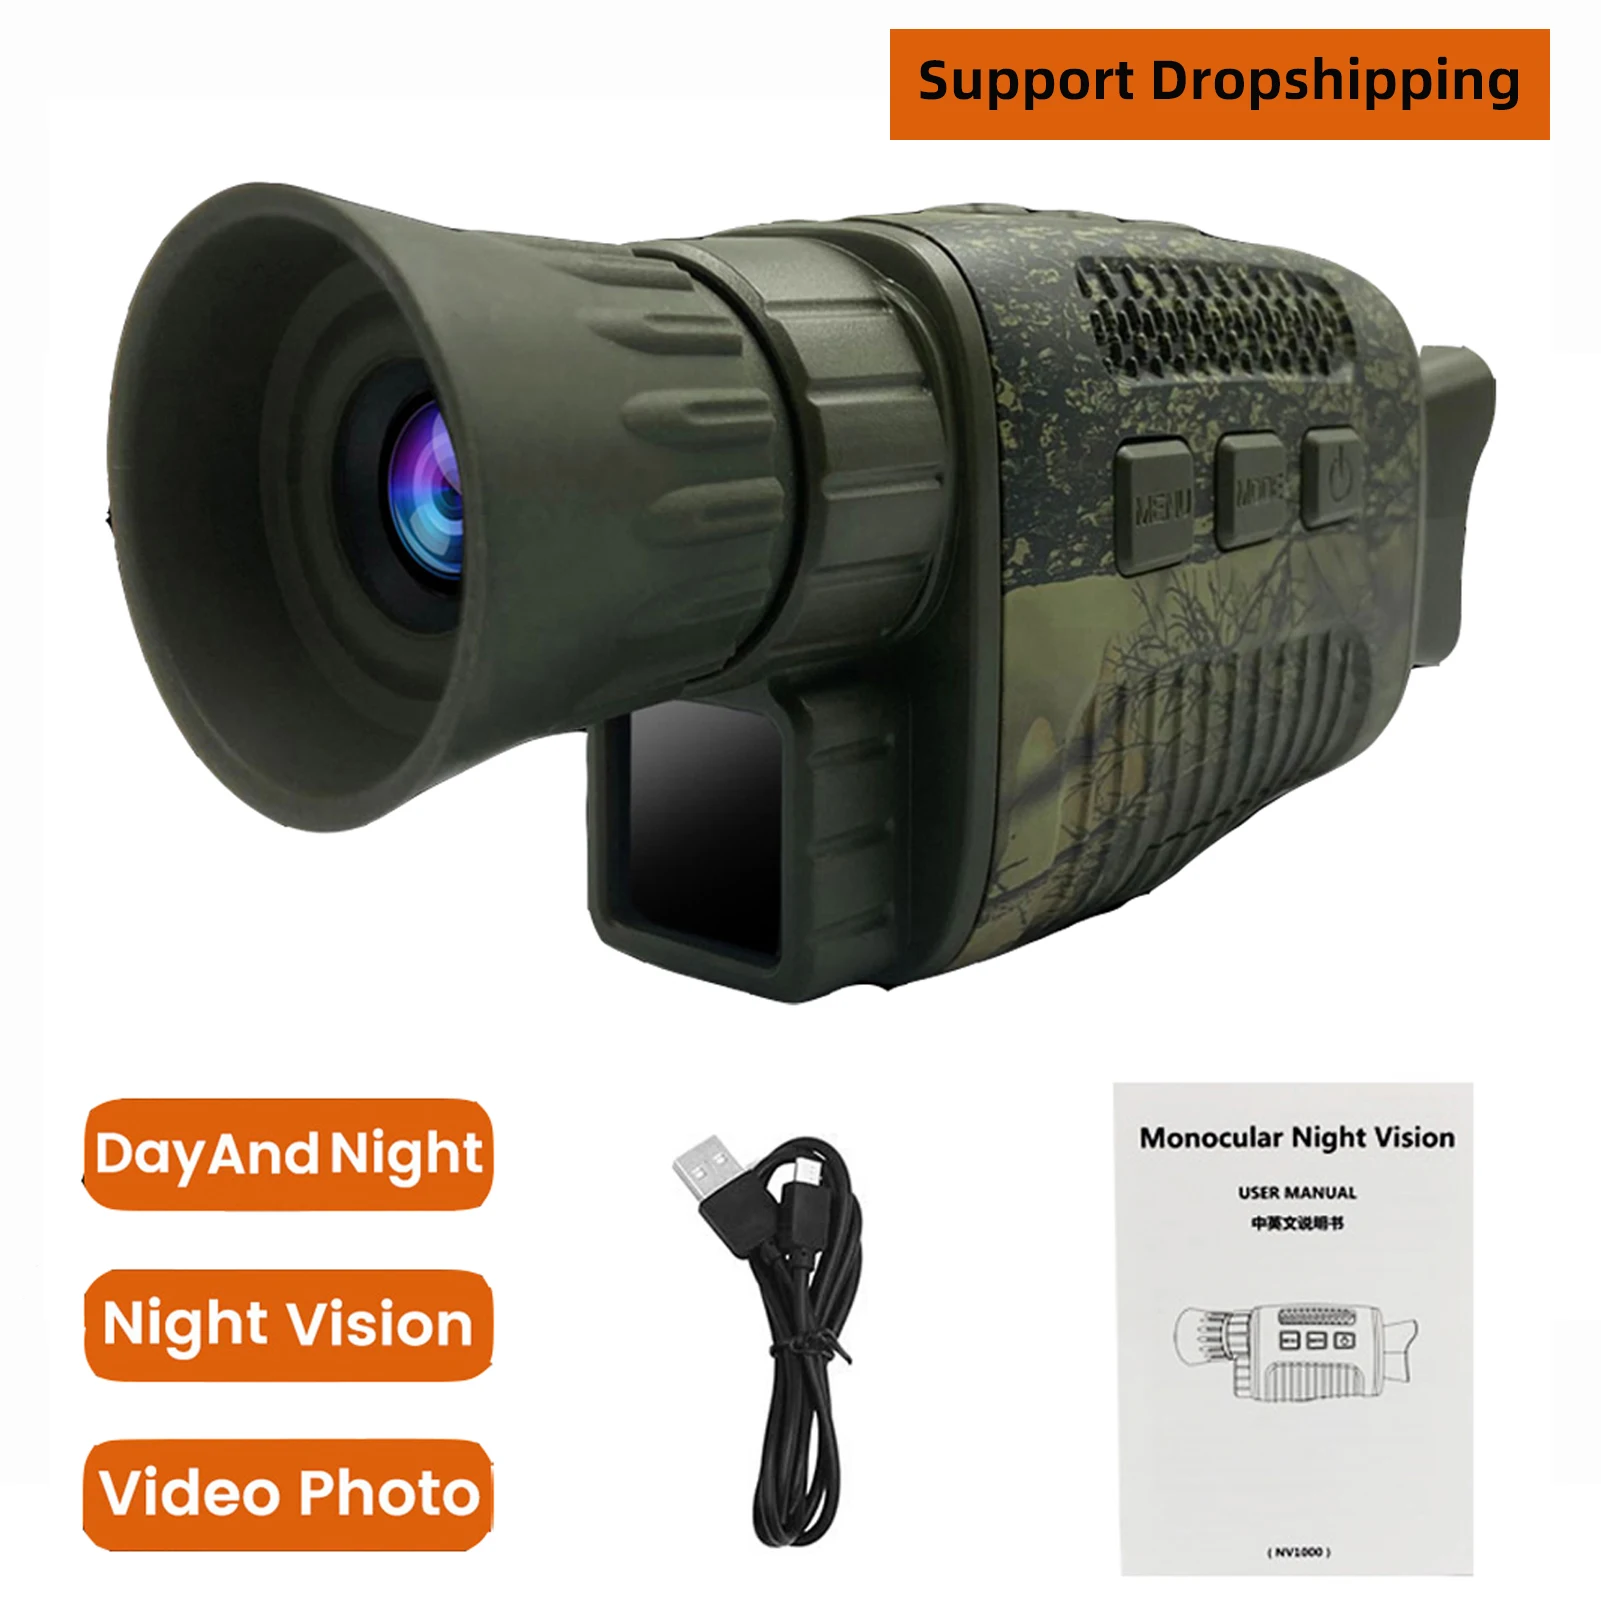 WG-37 Monocular Zoom Night Vision Scope Video Photo 8GB 5x40 Infrared IR Hunting 